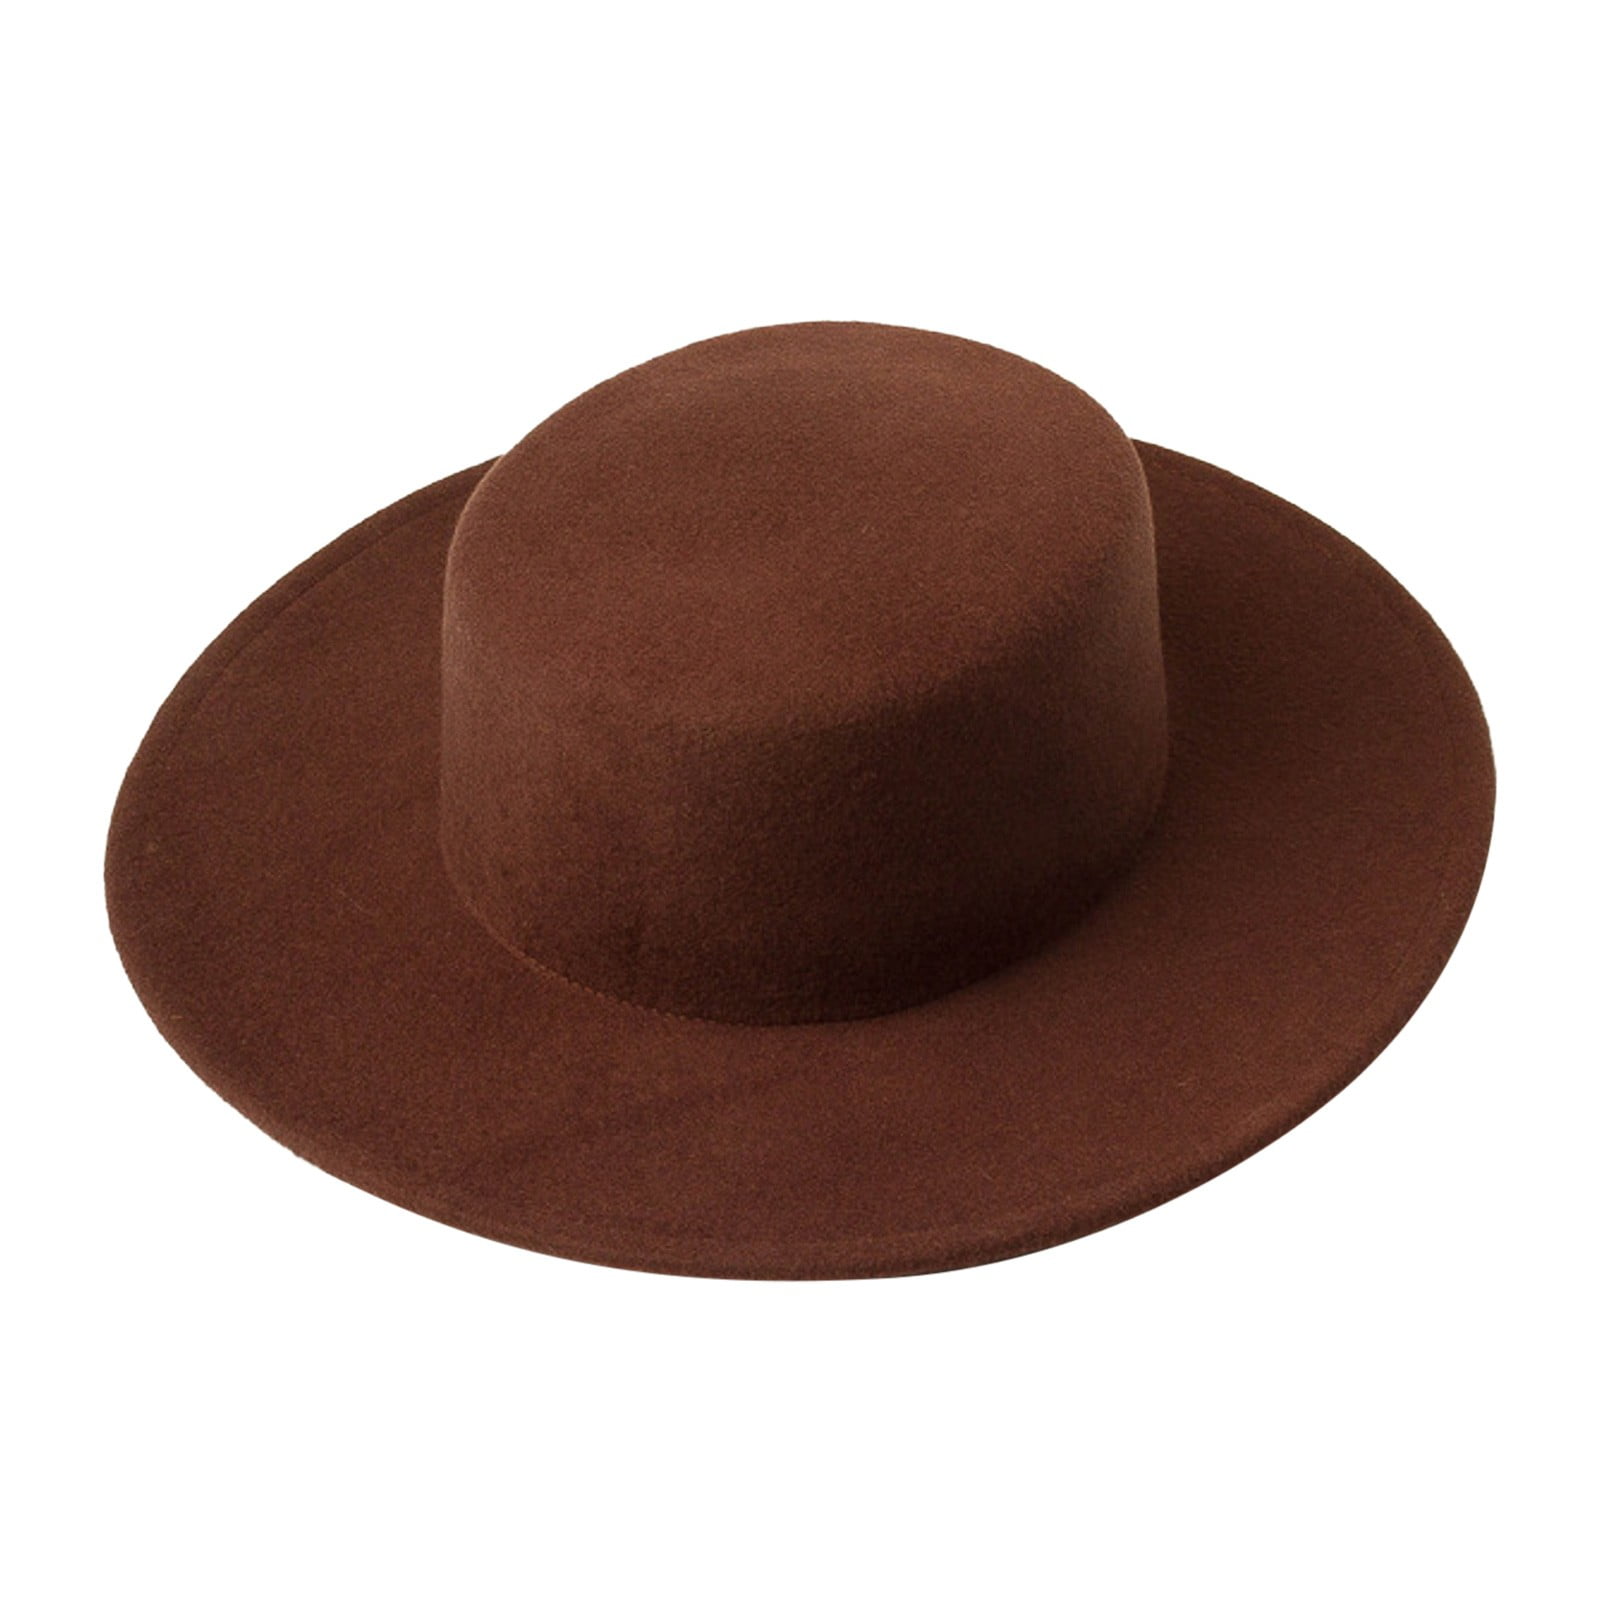 Ociviesr Fashion Trendy Colour Boater ShapeSombrero Winter Warm Outdoor  DressHat Desert Hats for Men Mens Floppy Hat 